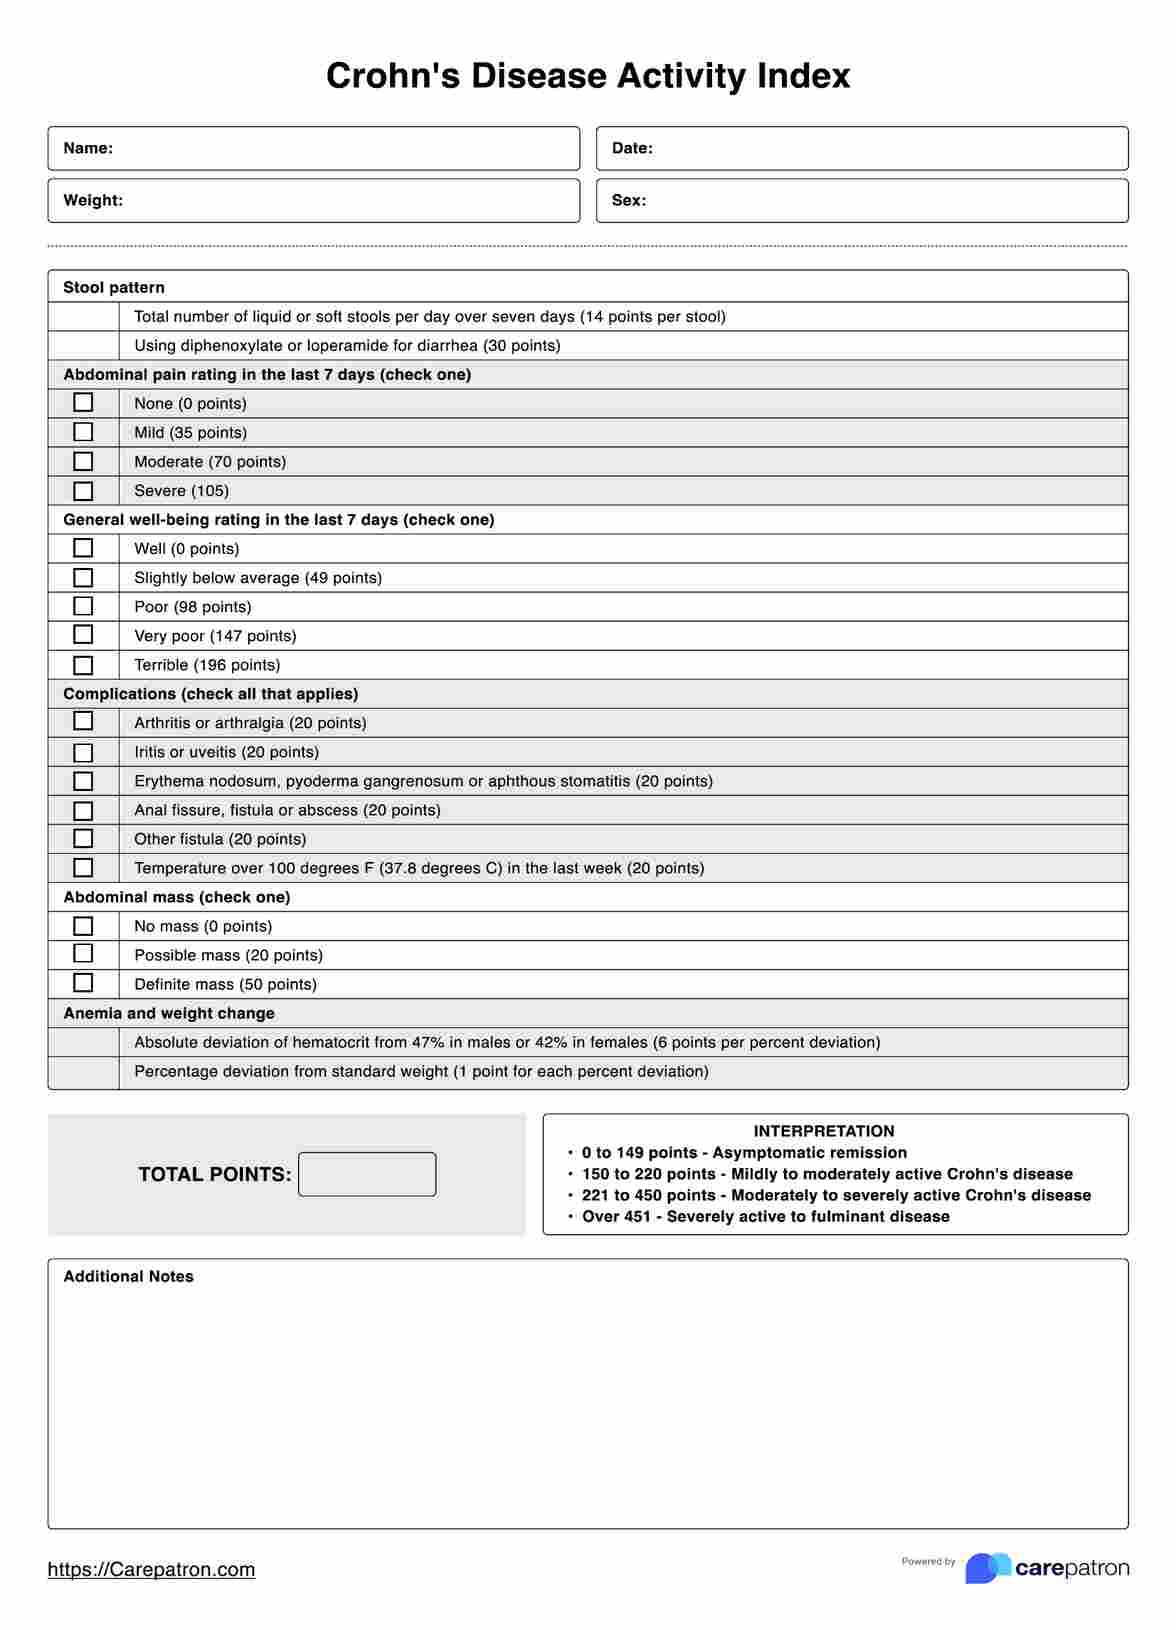 Crohn's Disease Activity Index (CDAI) PDF Example